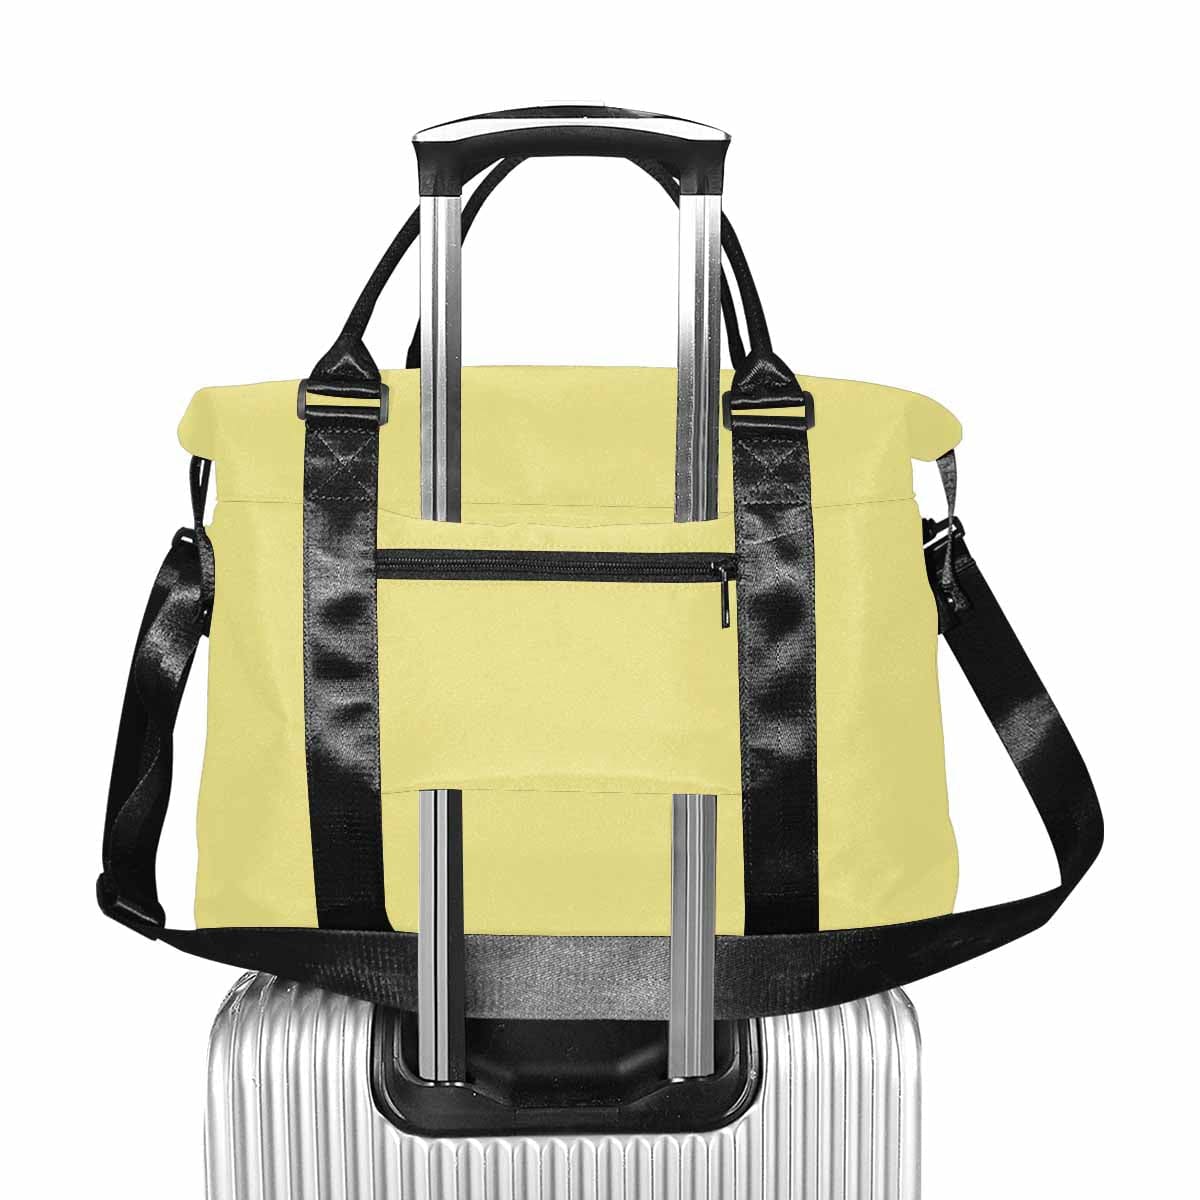 Khaki Yellow Duffel Bag Large Travel Carry On - Bags | Duffel Bags